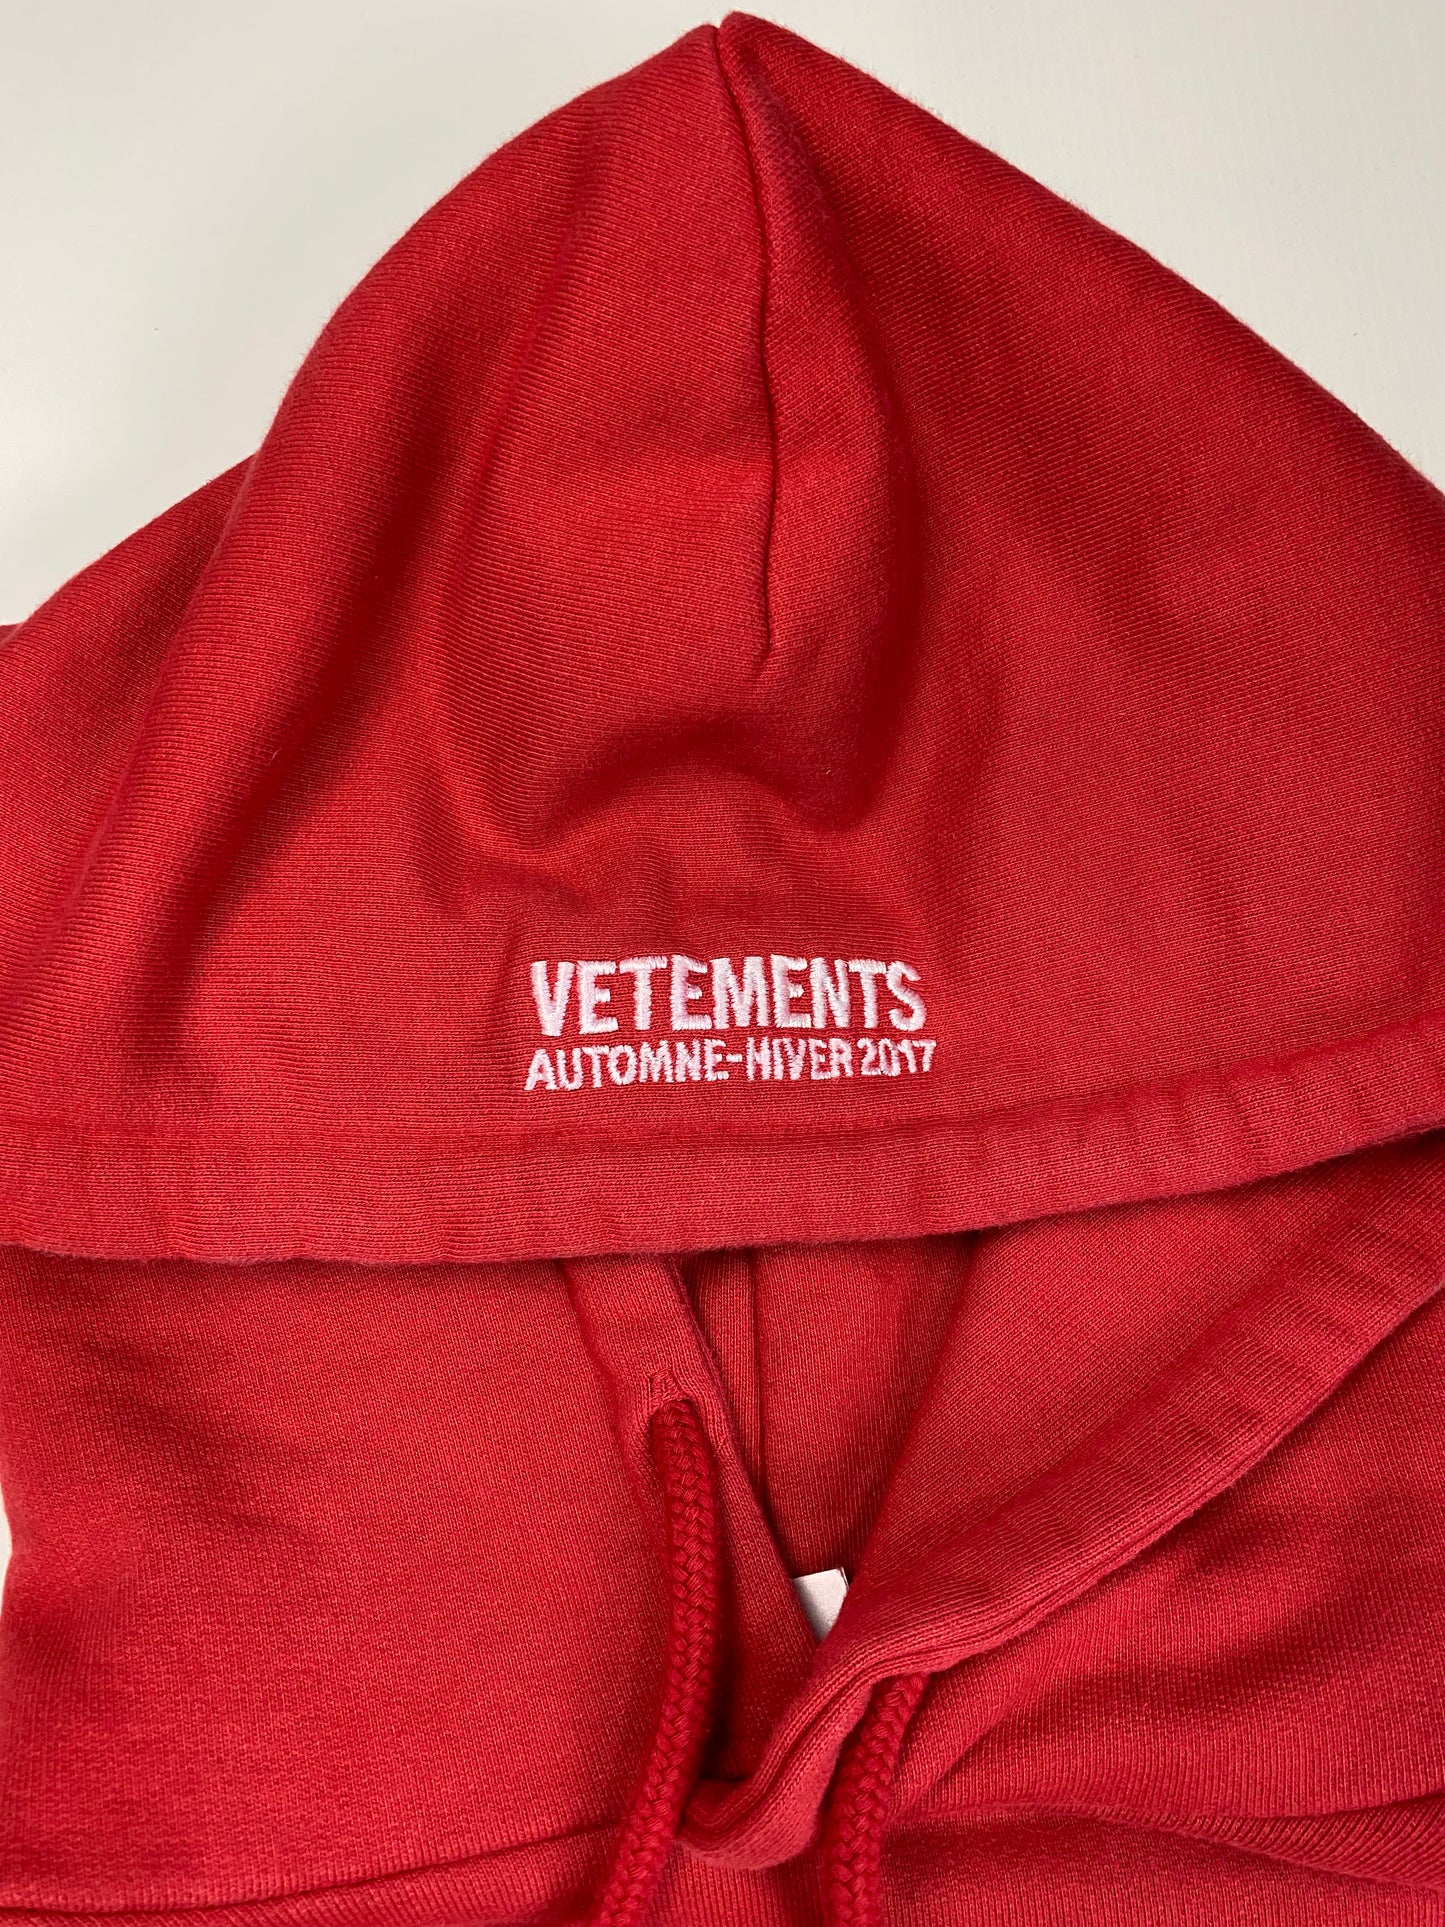 Vetements Seoul Exclusive oversized OG METAL hoodie in red SZ:XS|M